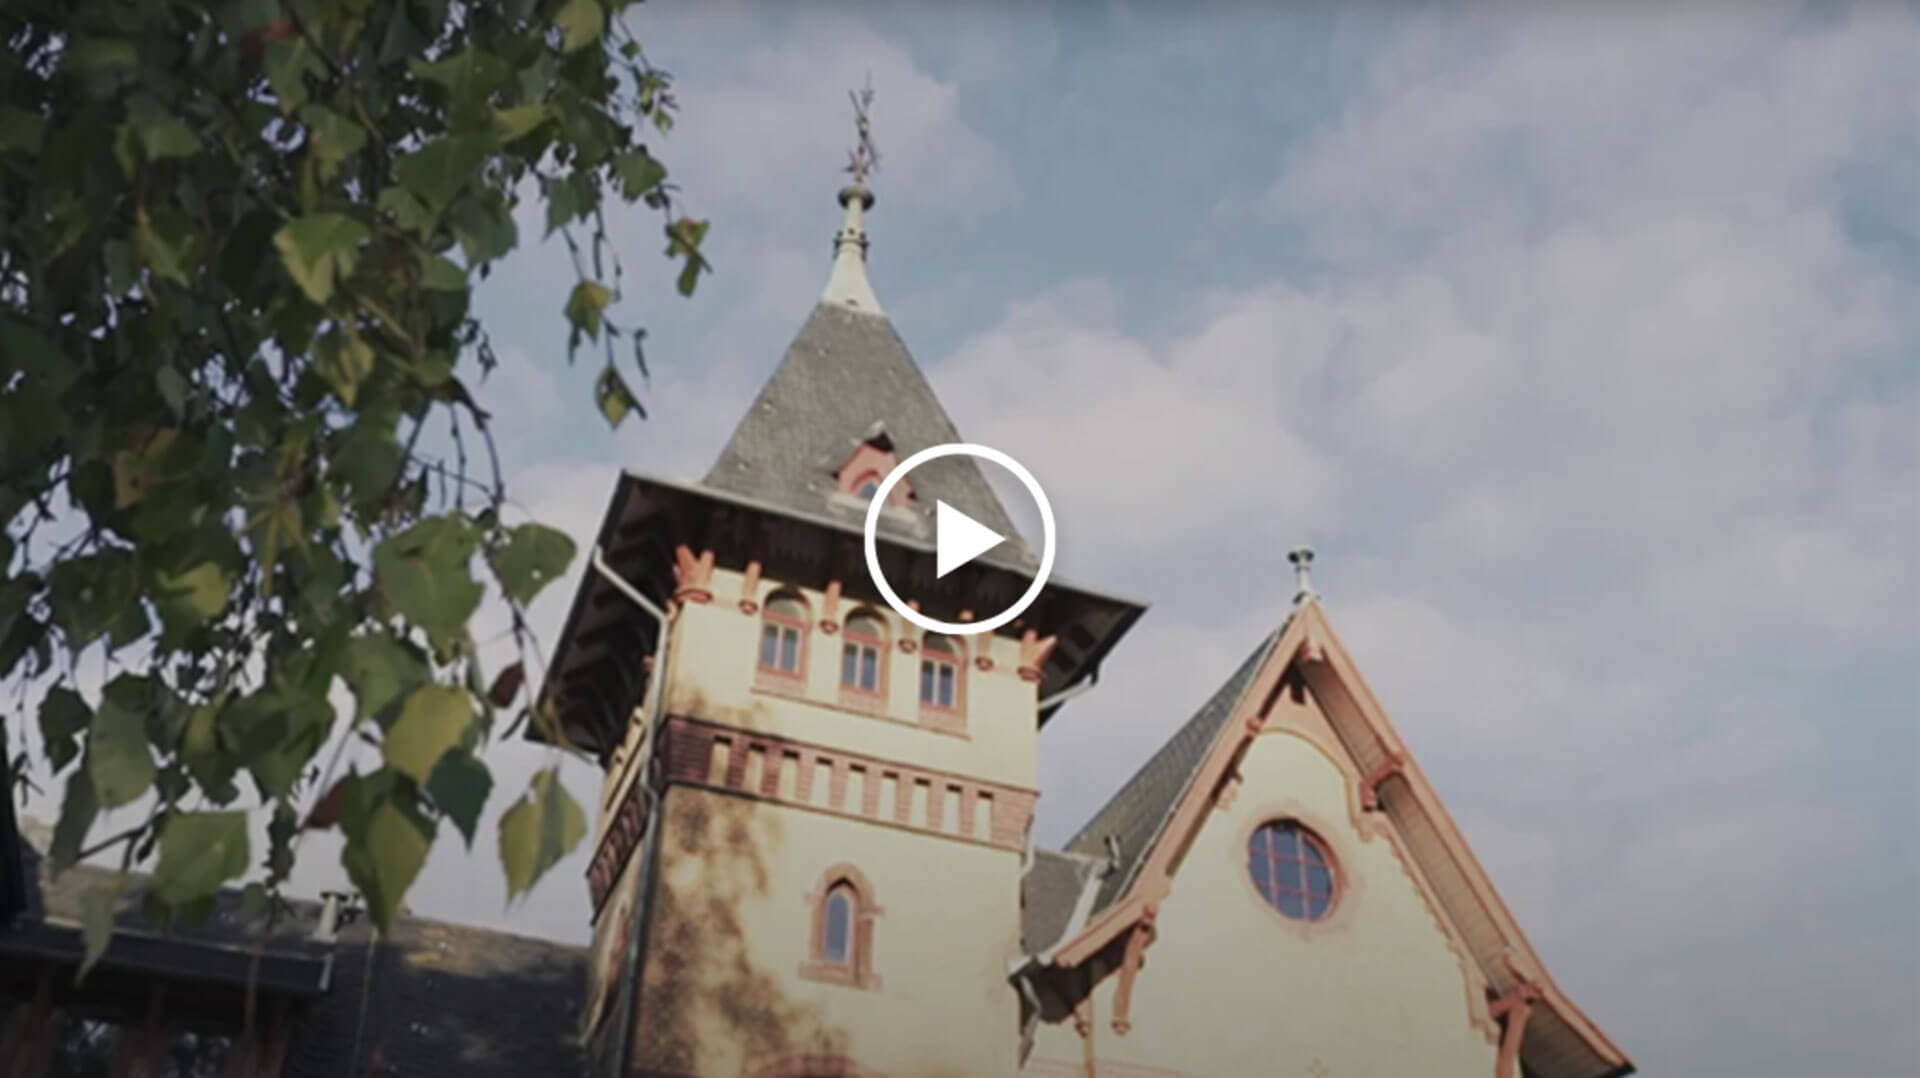 Video Rothenburgsort